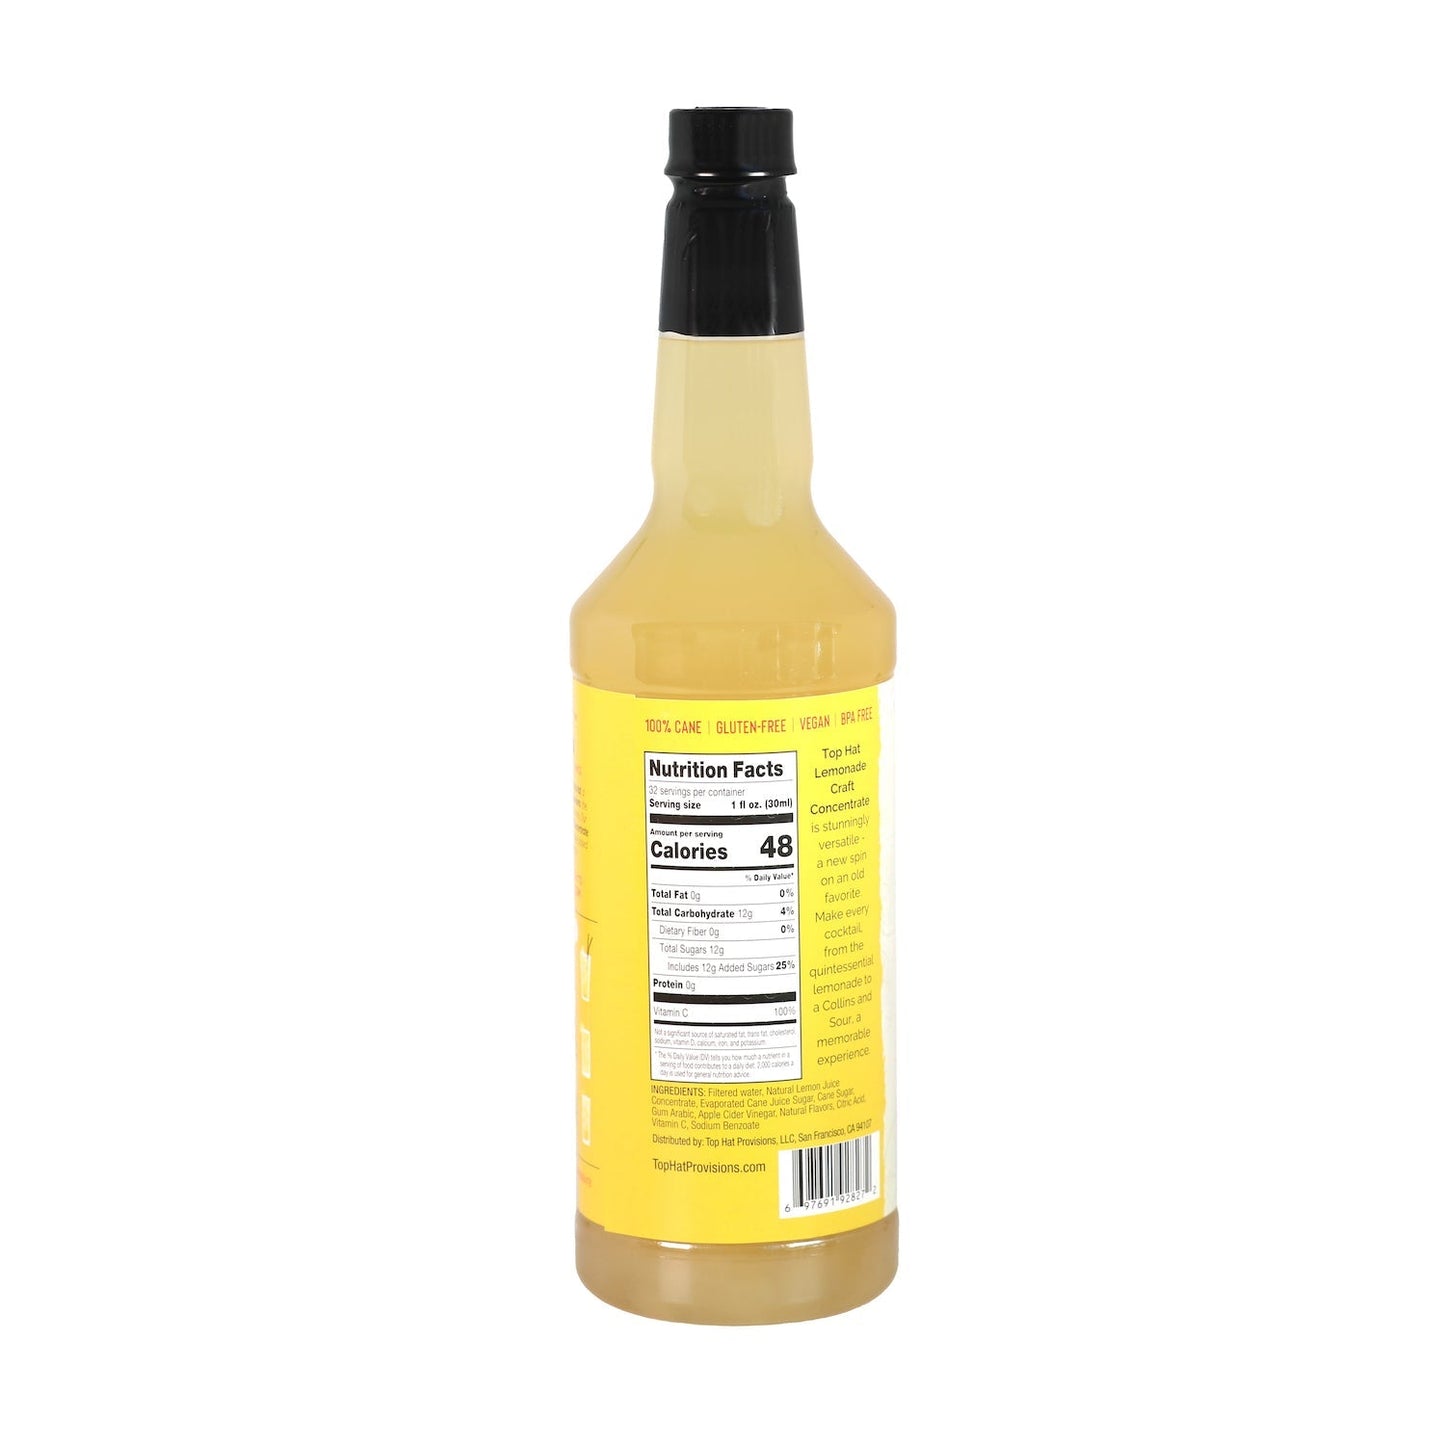 Top Hat Lemonade Mix & Craft Sour Batching Concentrate - 32oz bottle - Groove Rabbit